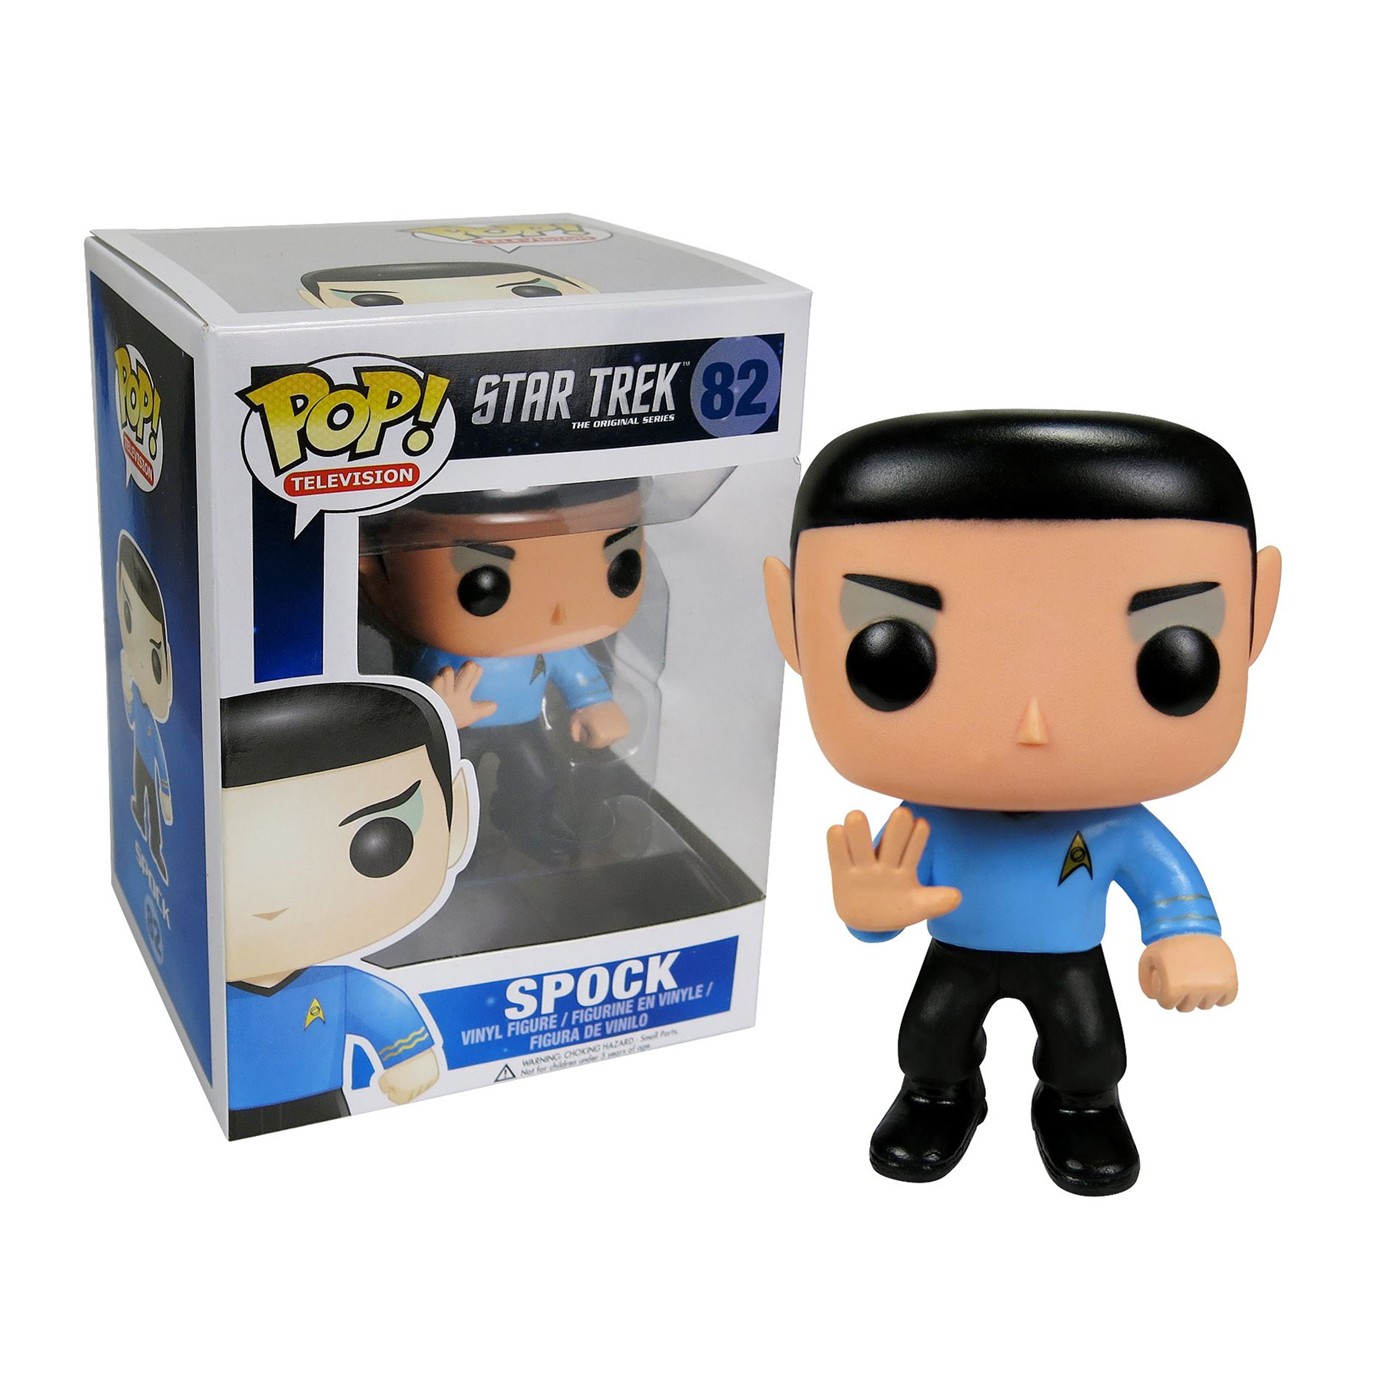 Star Trek Spock Pop Vinyl Figure